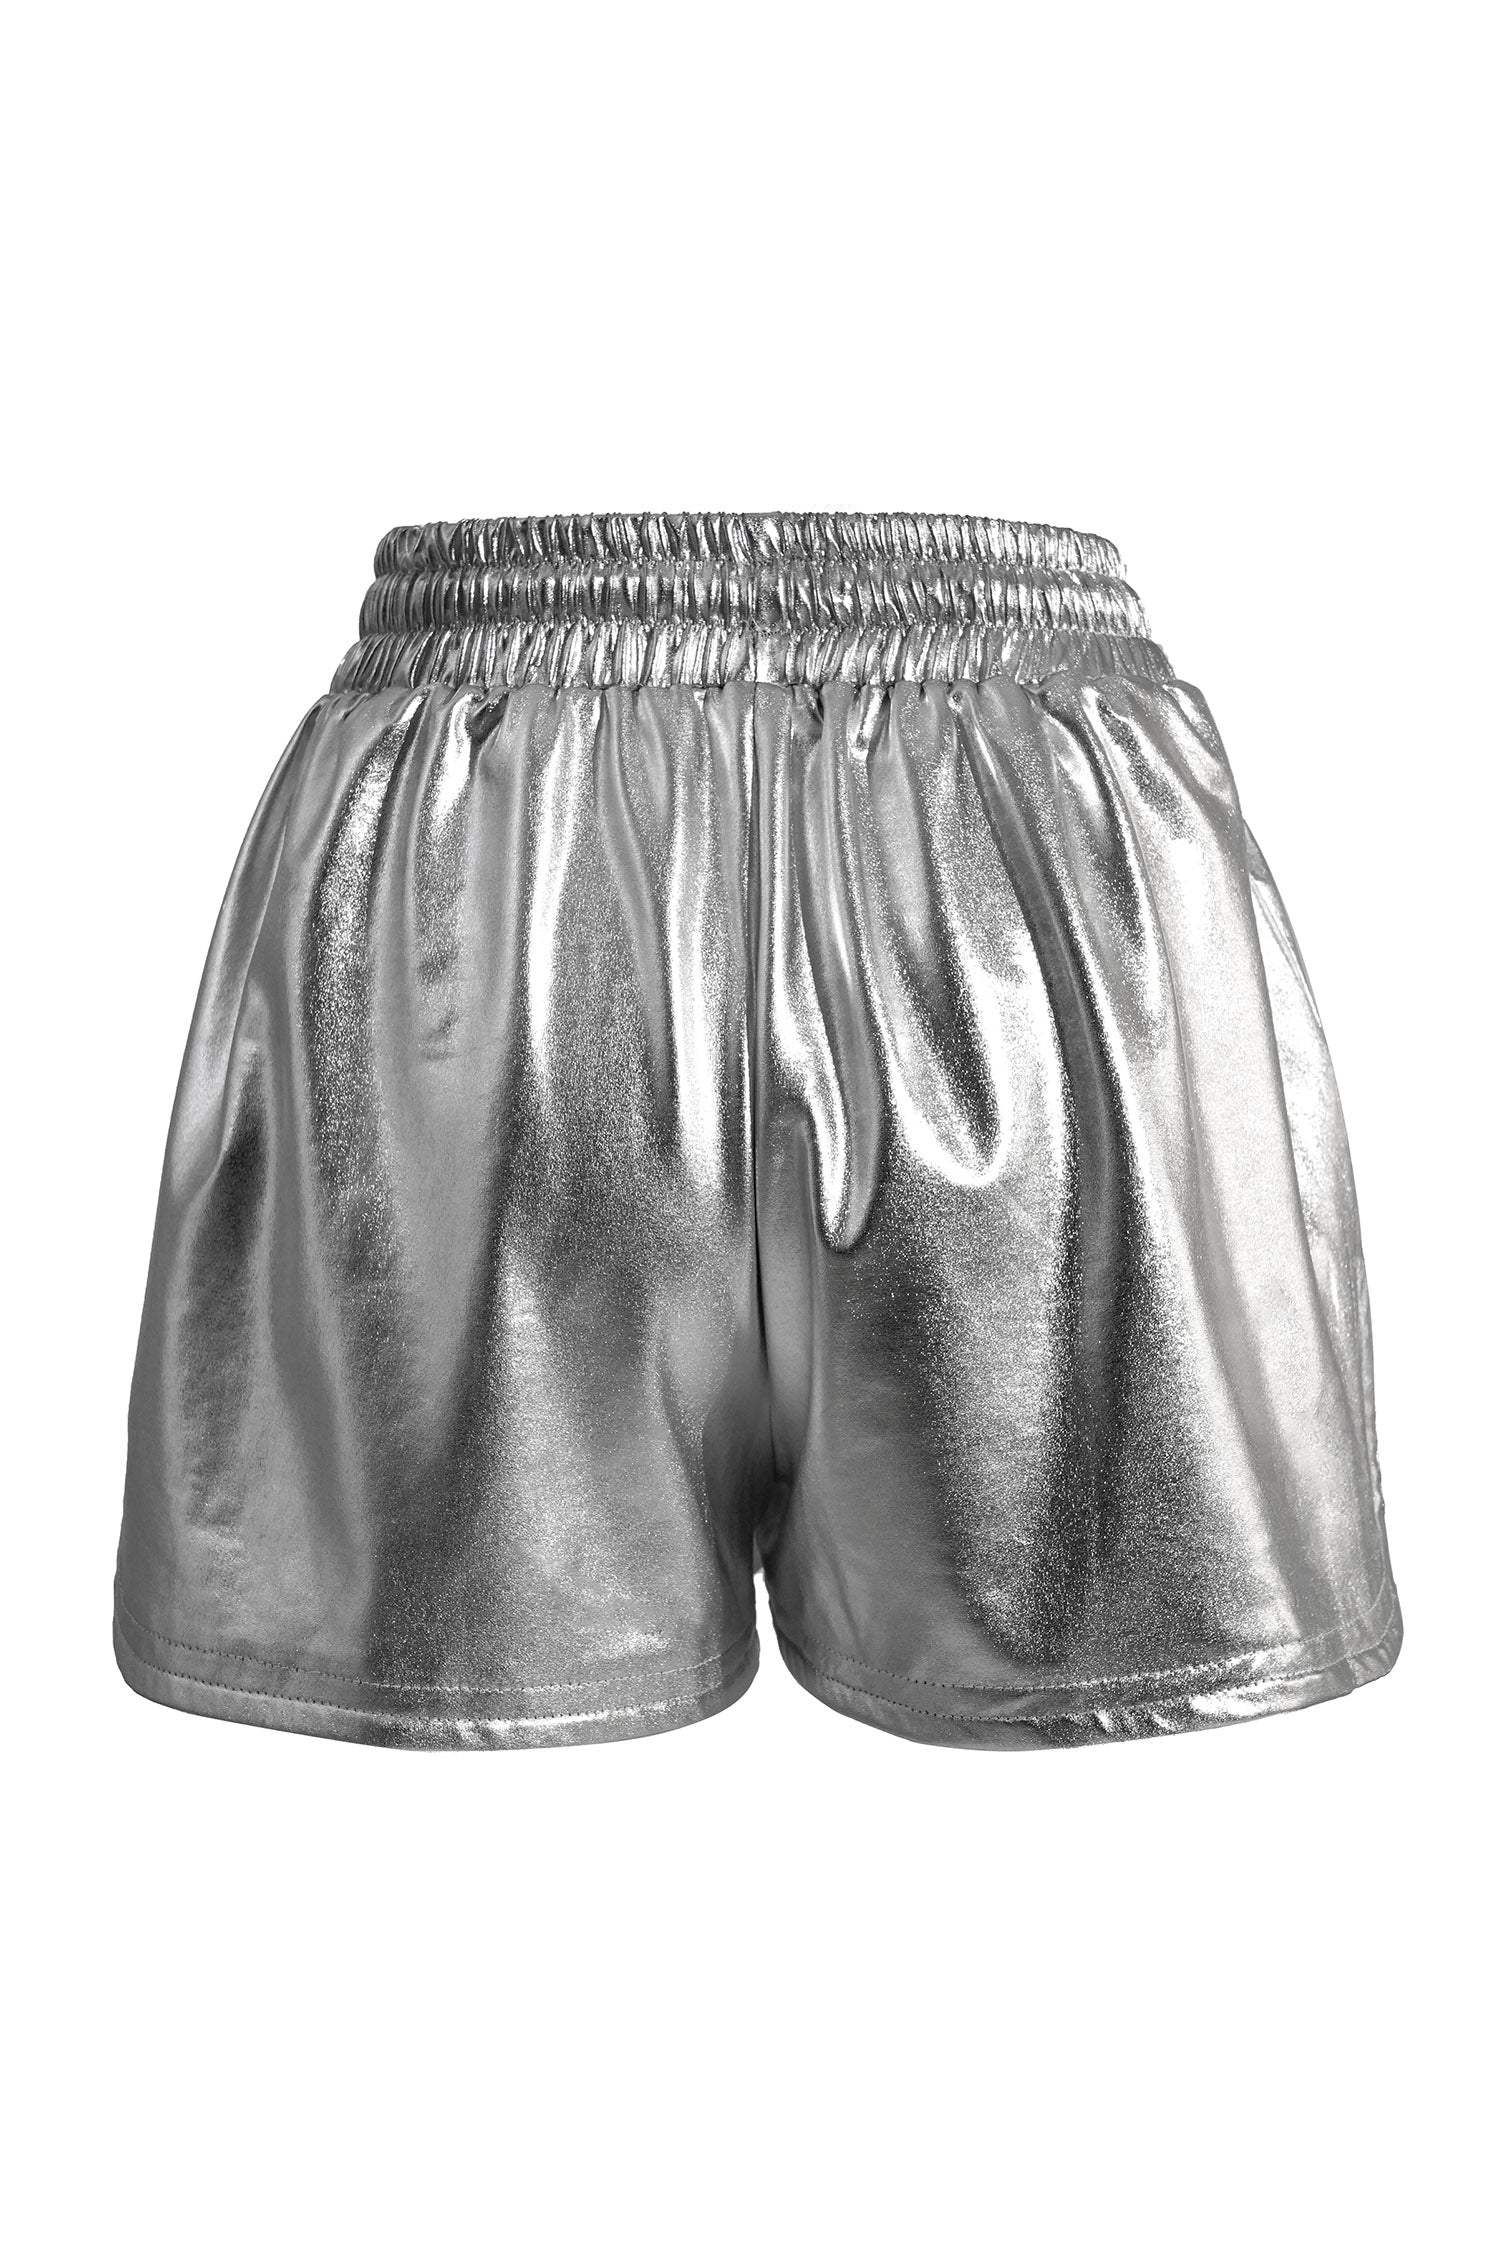 UrbanOG - Sissy Metallic Cropped Top and Shorts Set - TWOPIECE